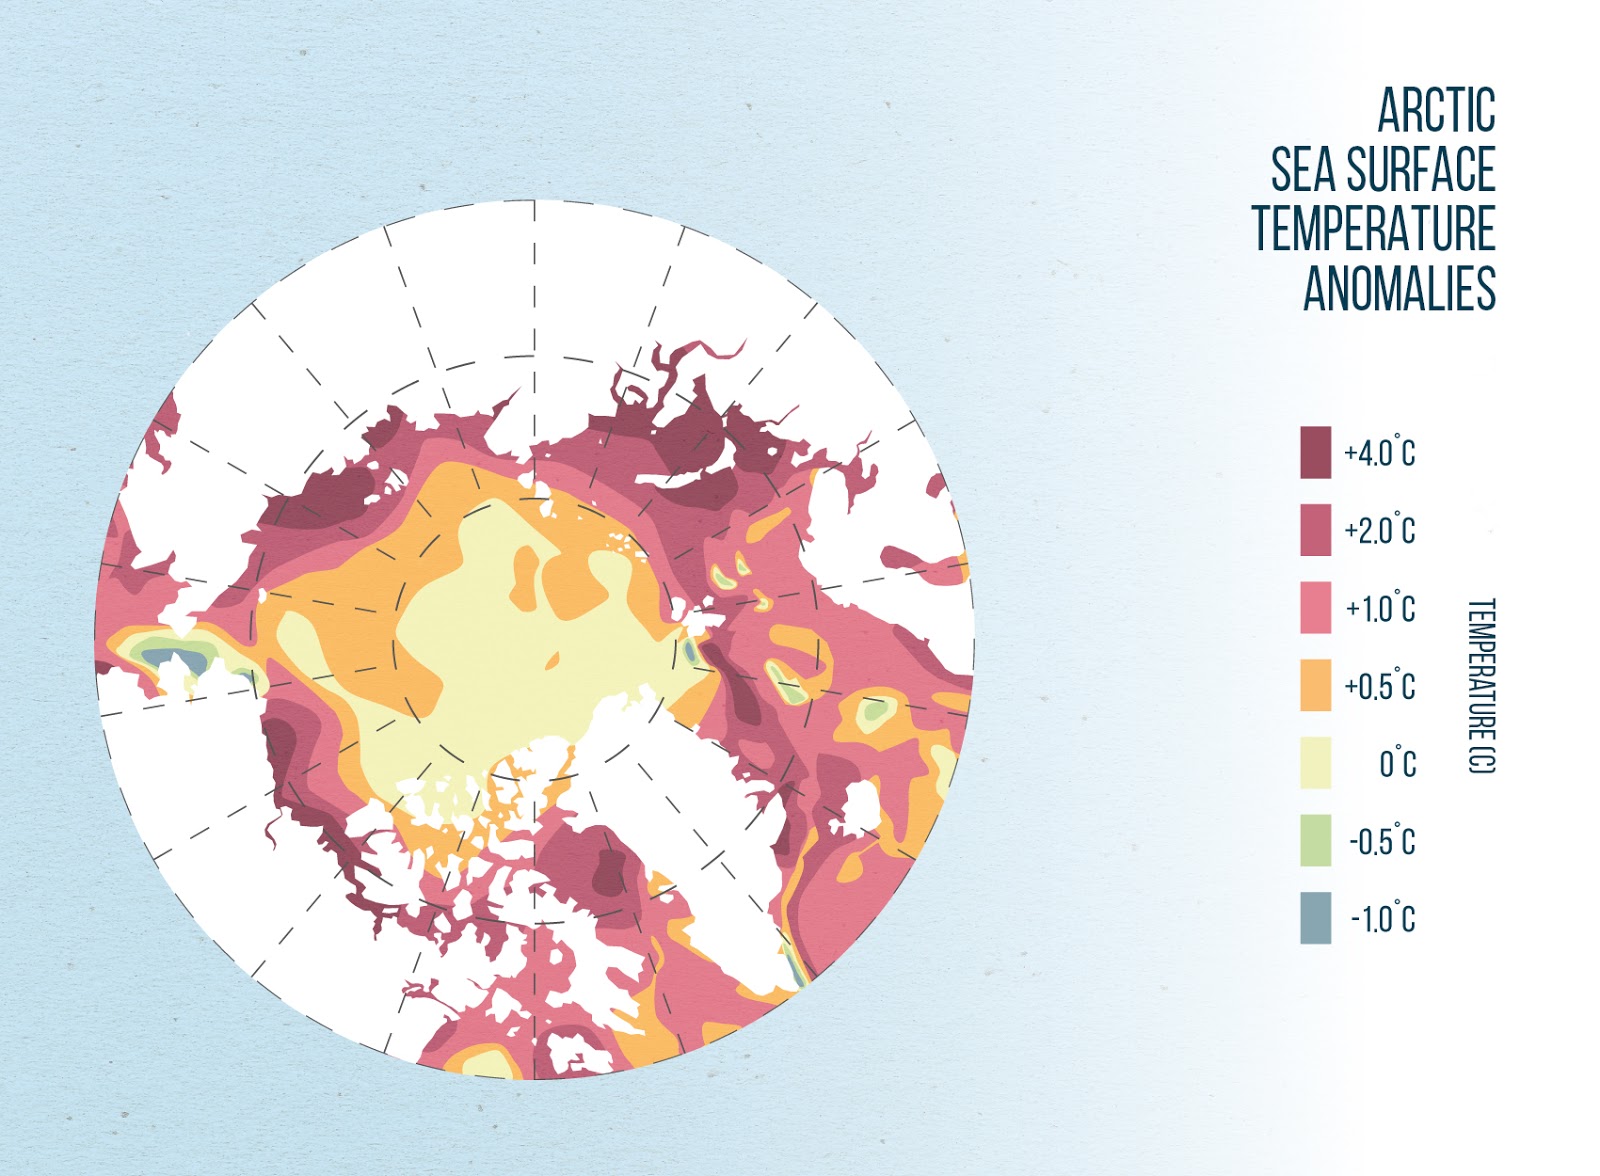 Water temperature map of the Arctic region